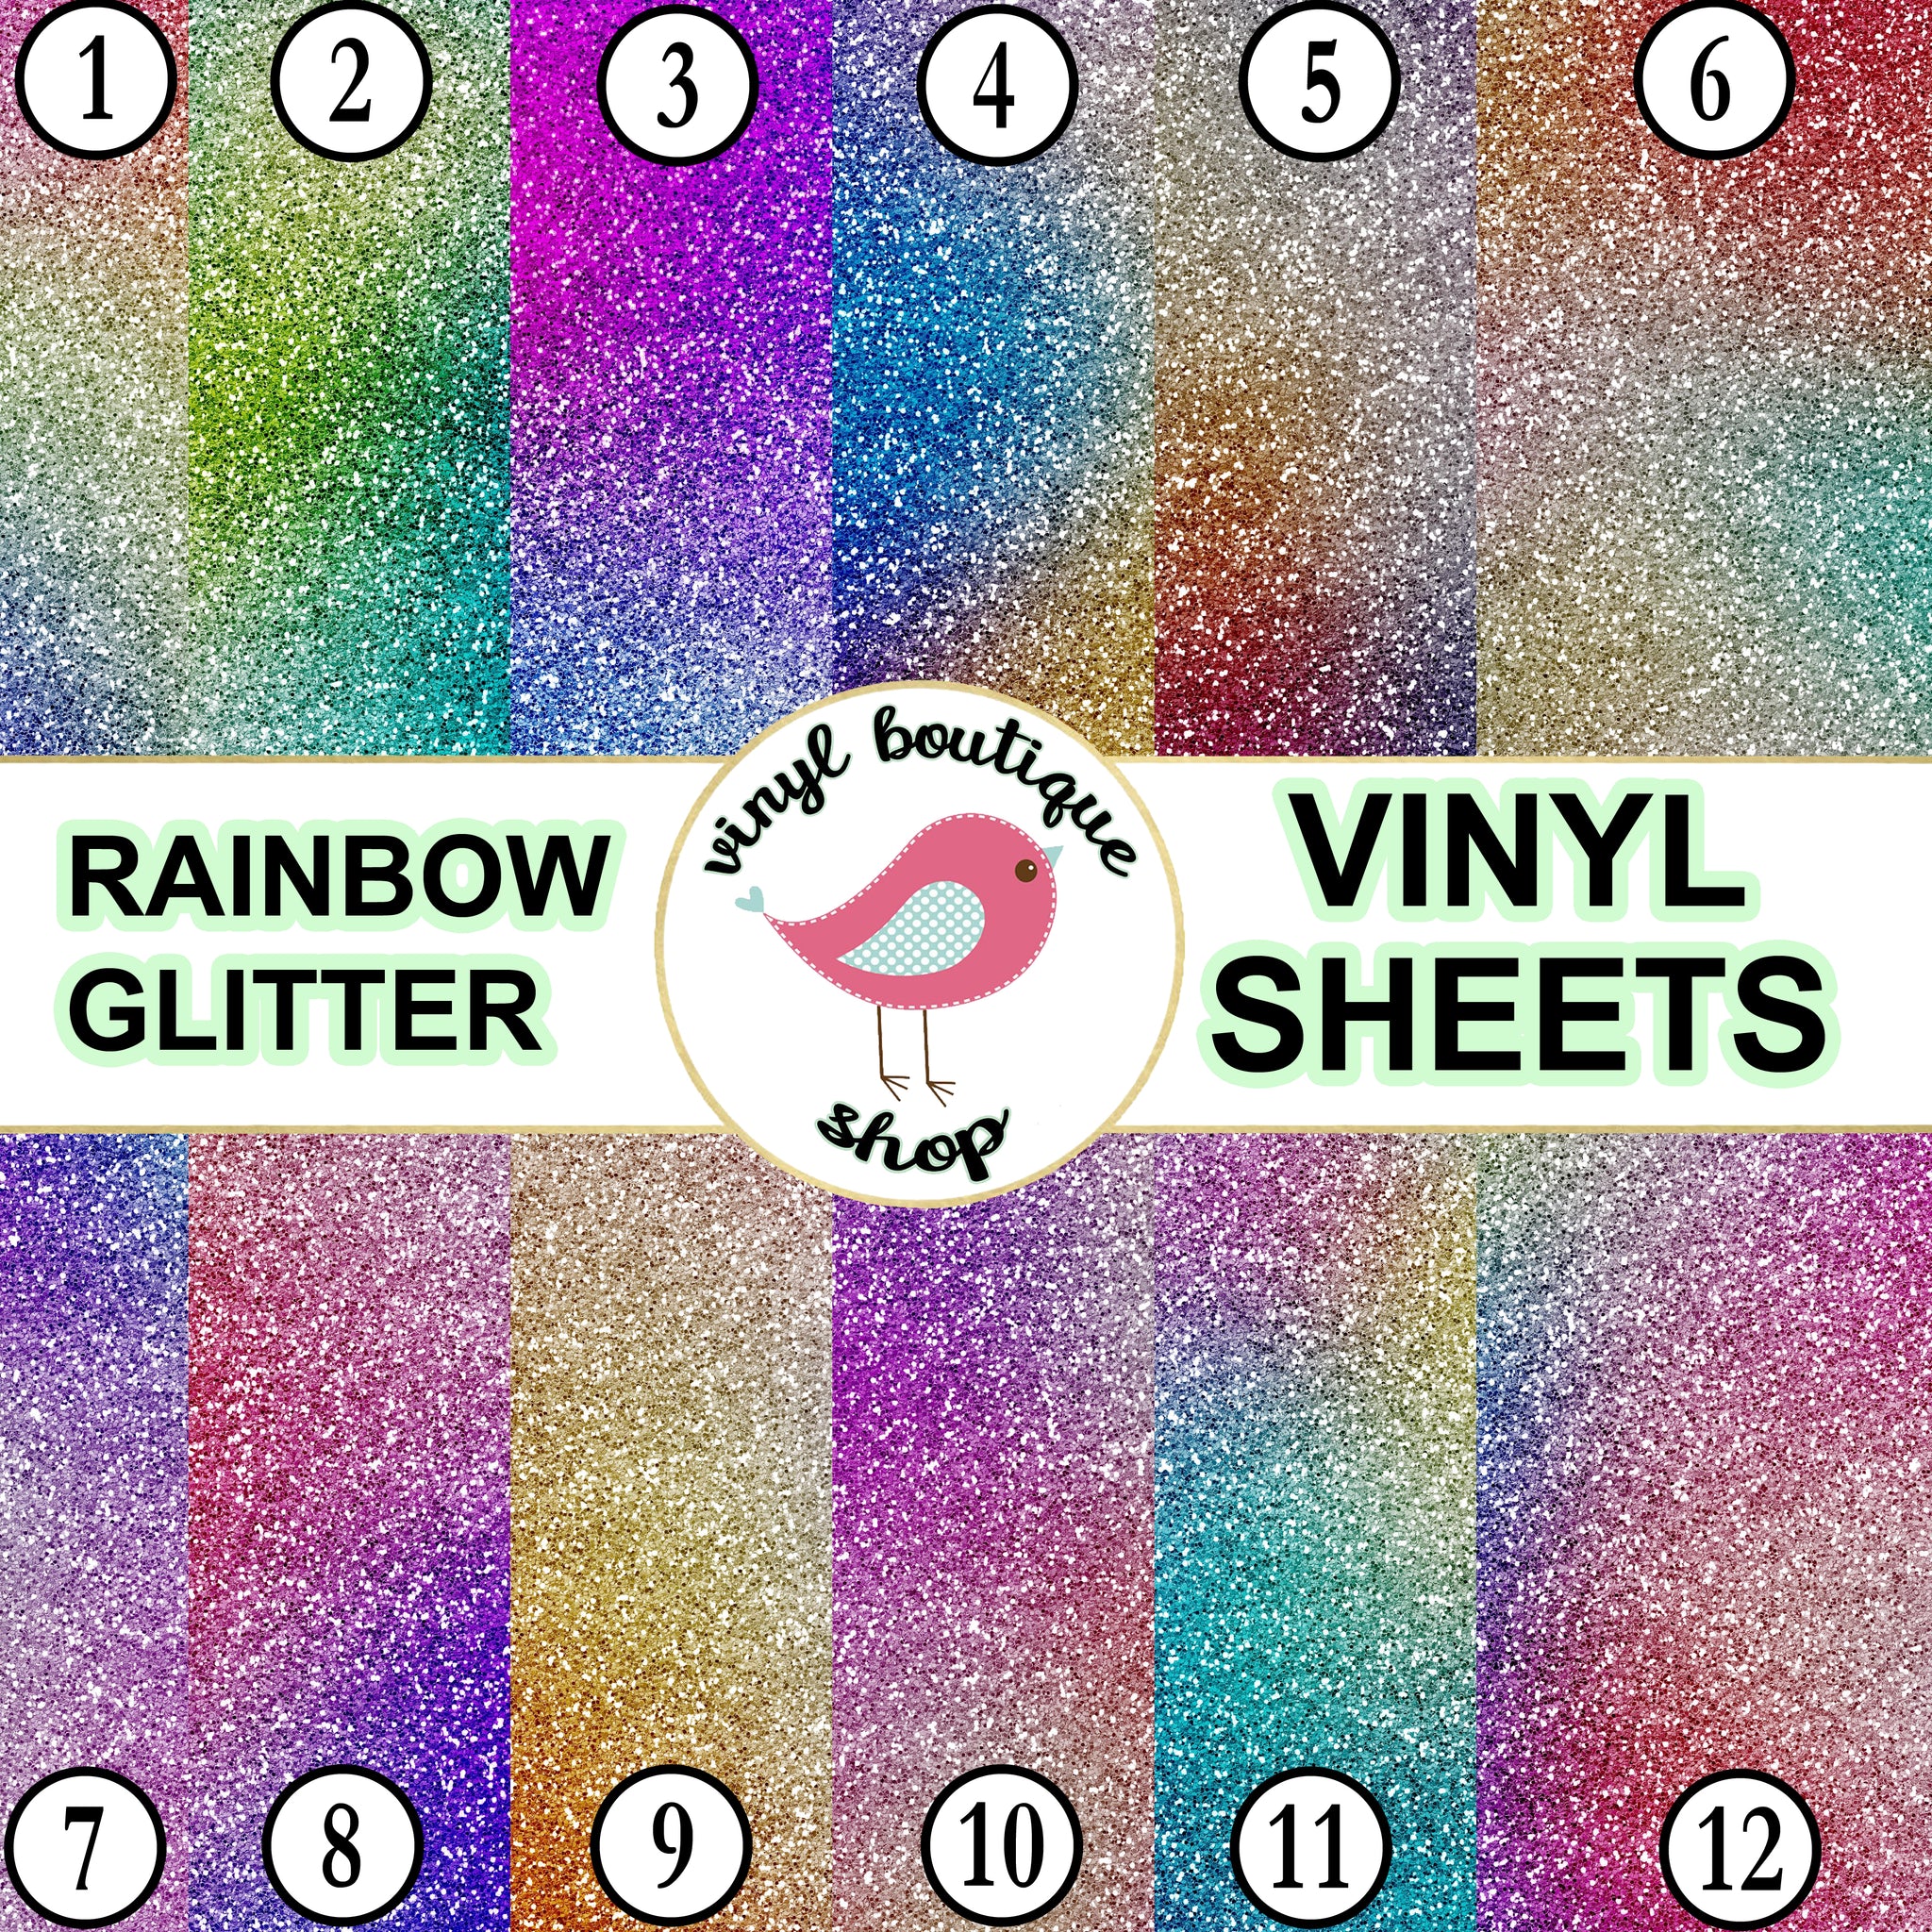 Rainbow Glitter Adhesive Heat Transfer Vinyl Sheet - Vinyl Boutique Shop